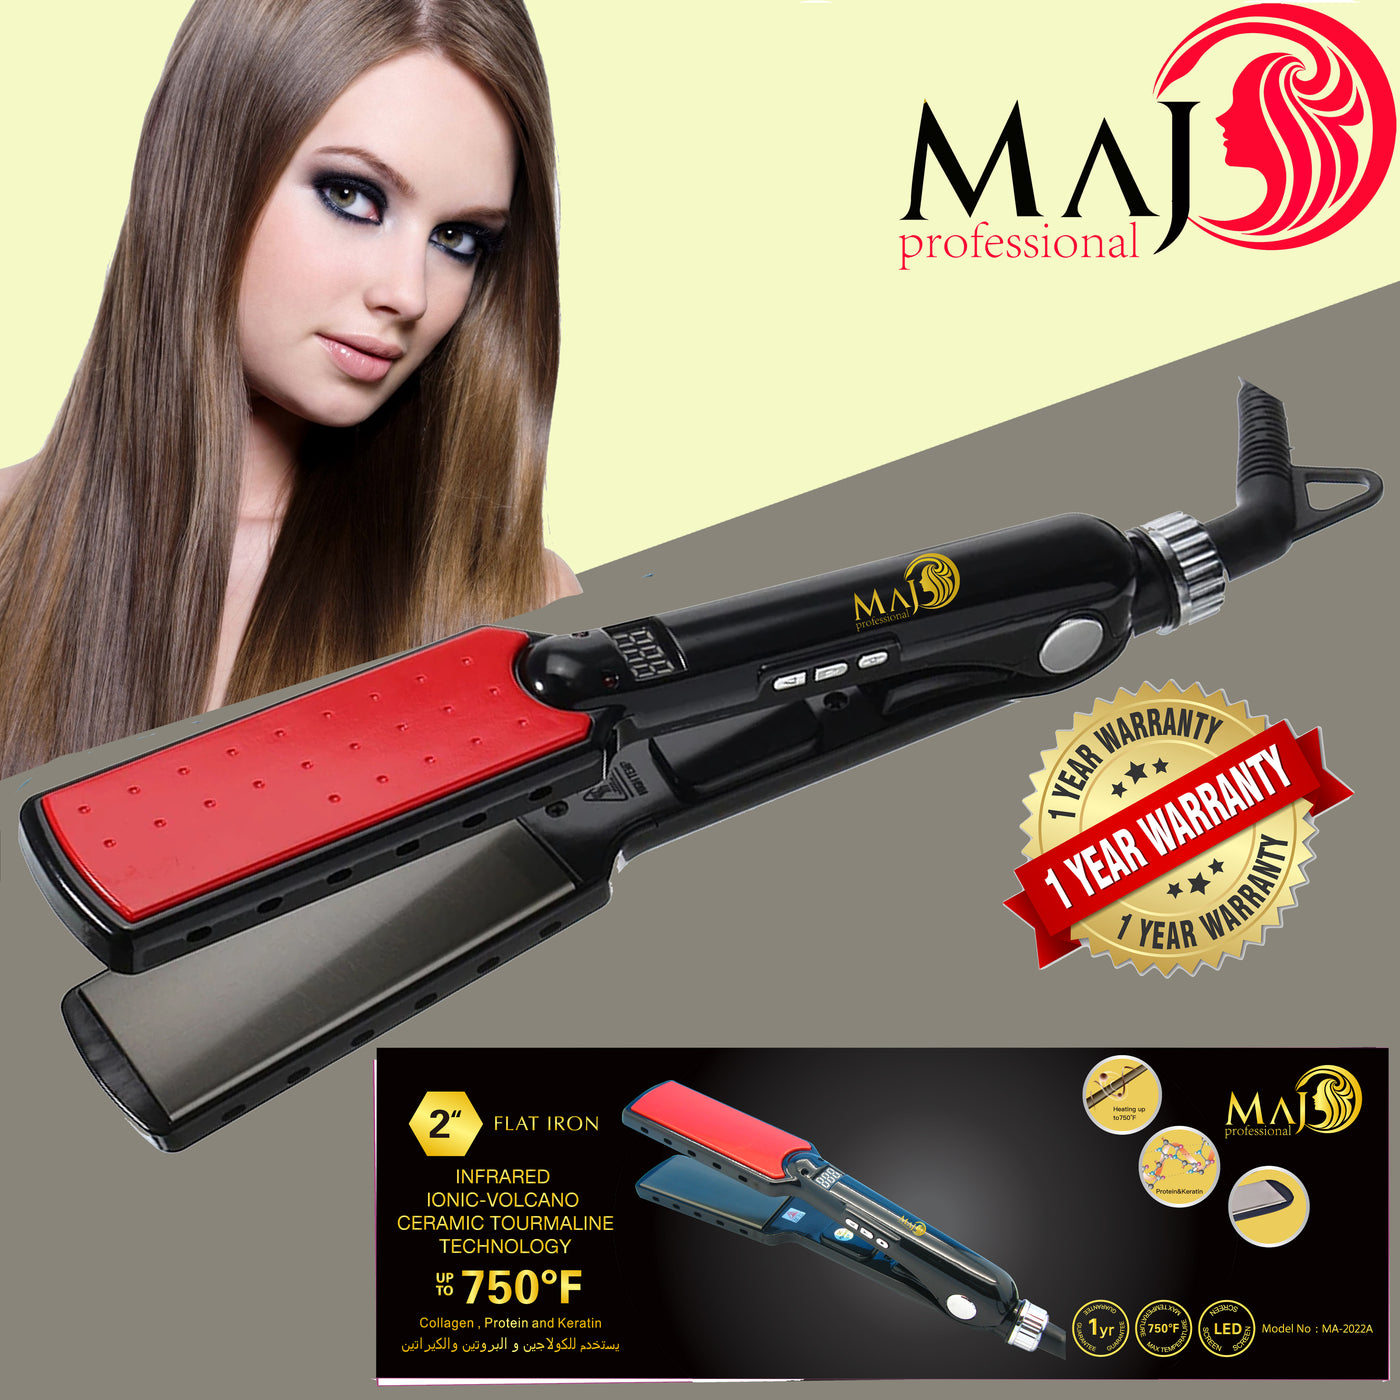 MAJ Professional Hair Straightener 750F ( 1 year warranty )